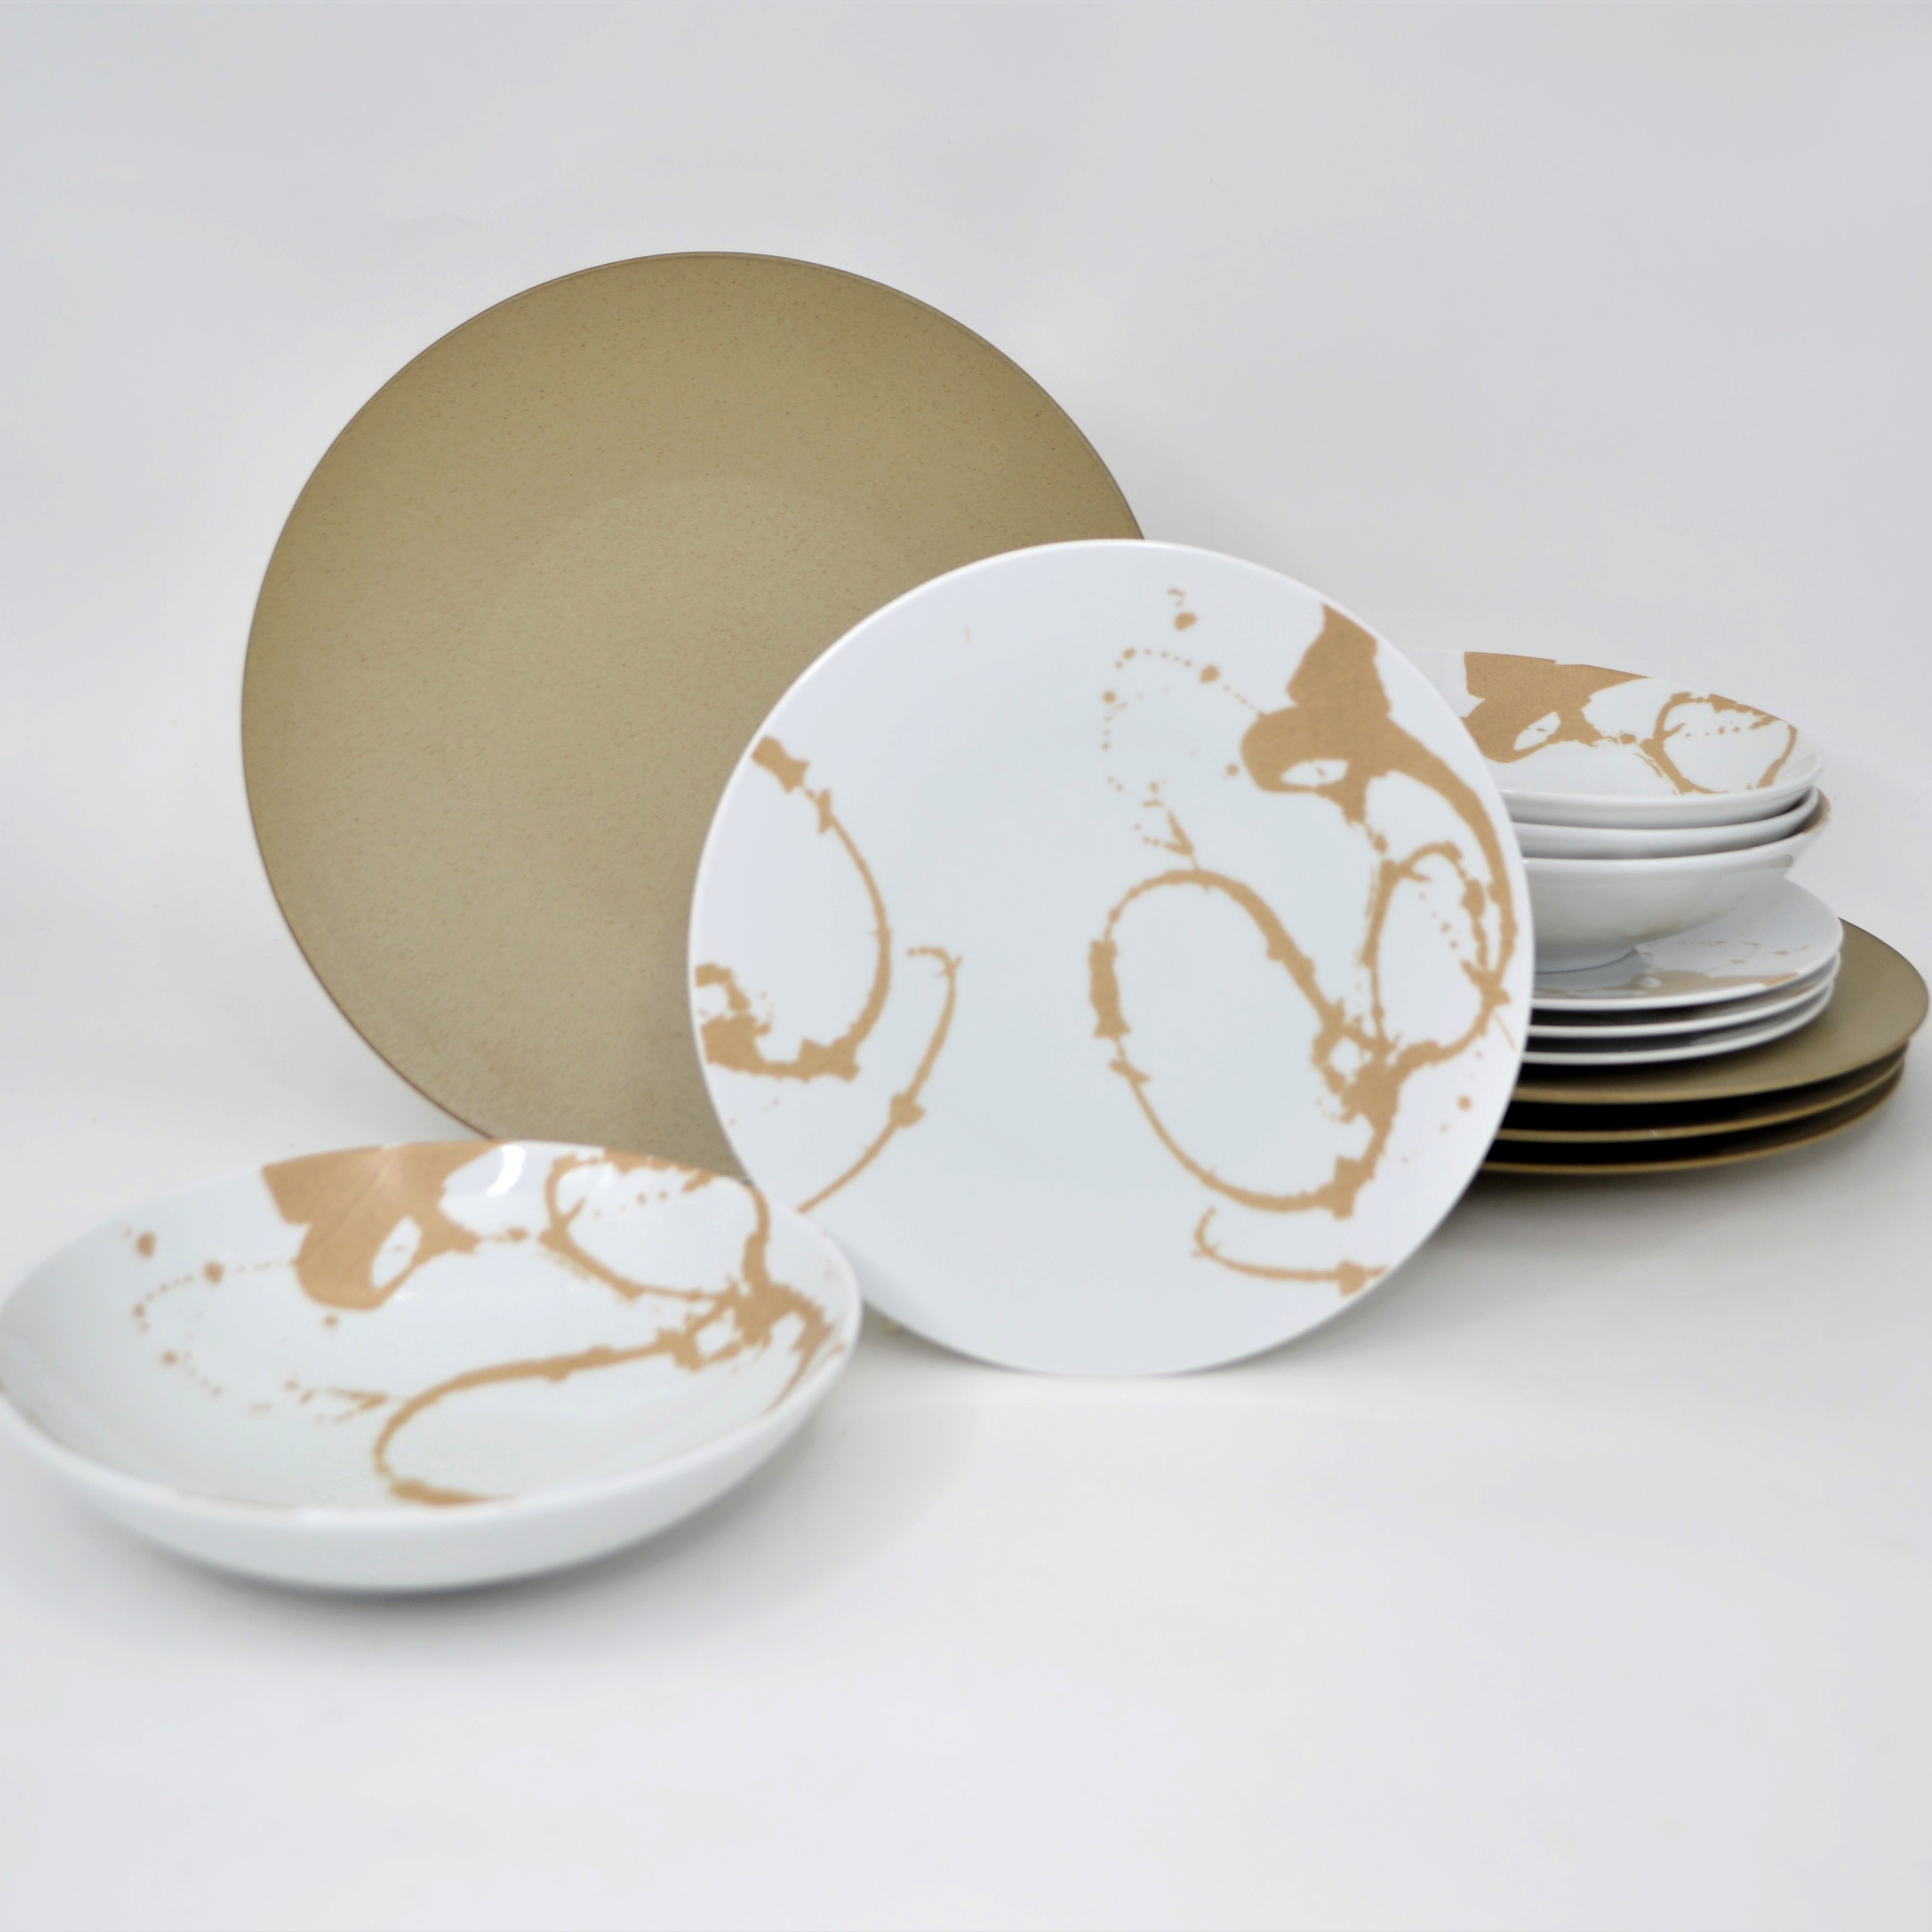 Euro Ceramica Nile 12 Piece Porcelain Dinnerware Set (Service for 4) - Champaign Gold/Red/Black